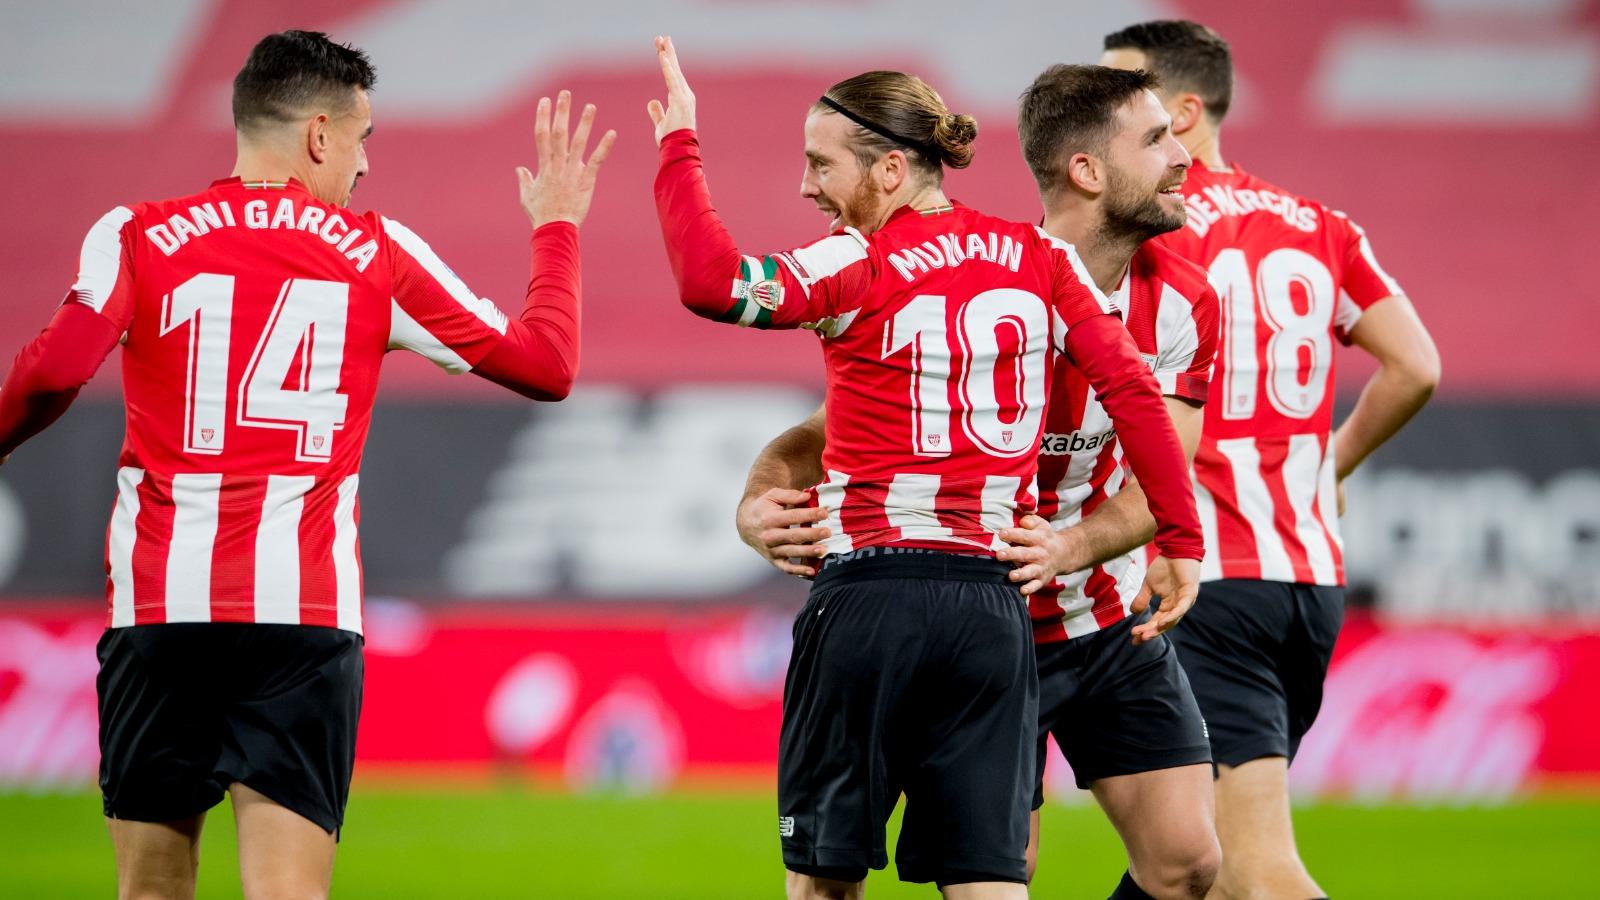 Bilbao primio gol u 1. minuti, a onda do vrha napunio mrežu Hetafea